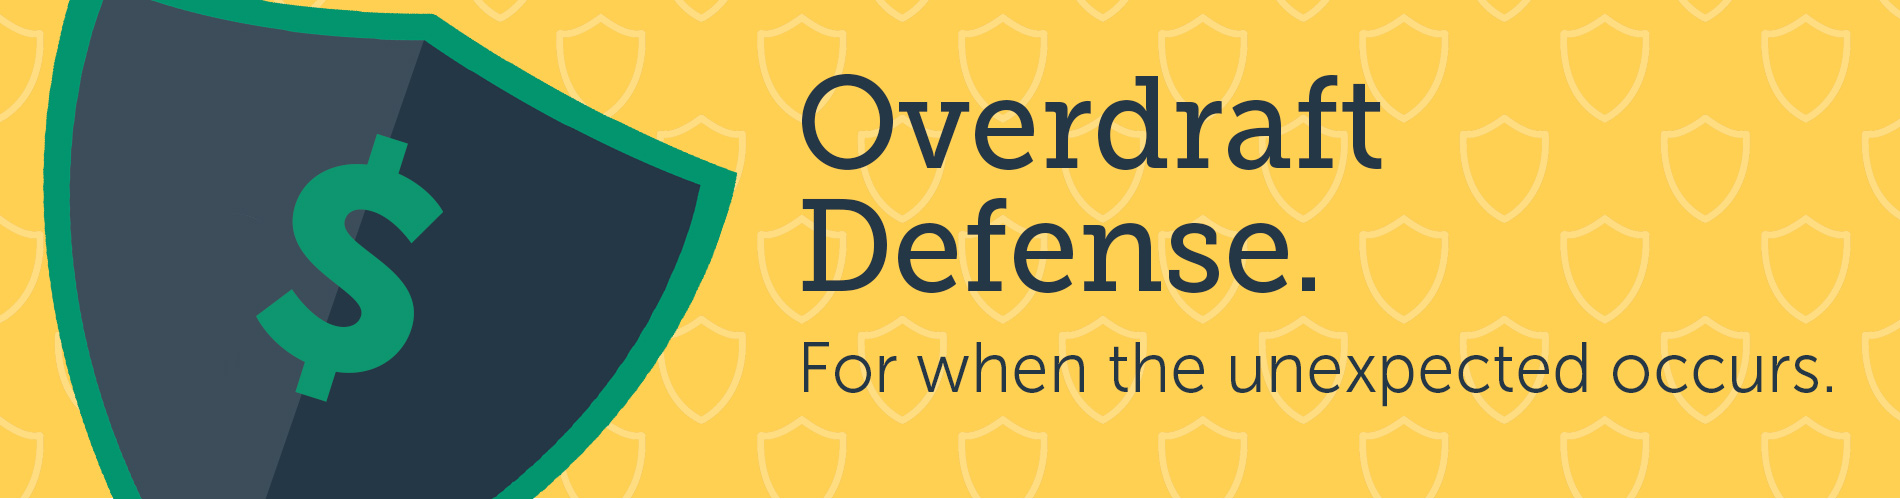 Overdraft-Defense-Header